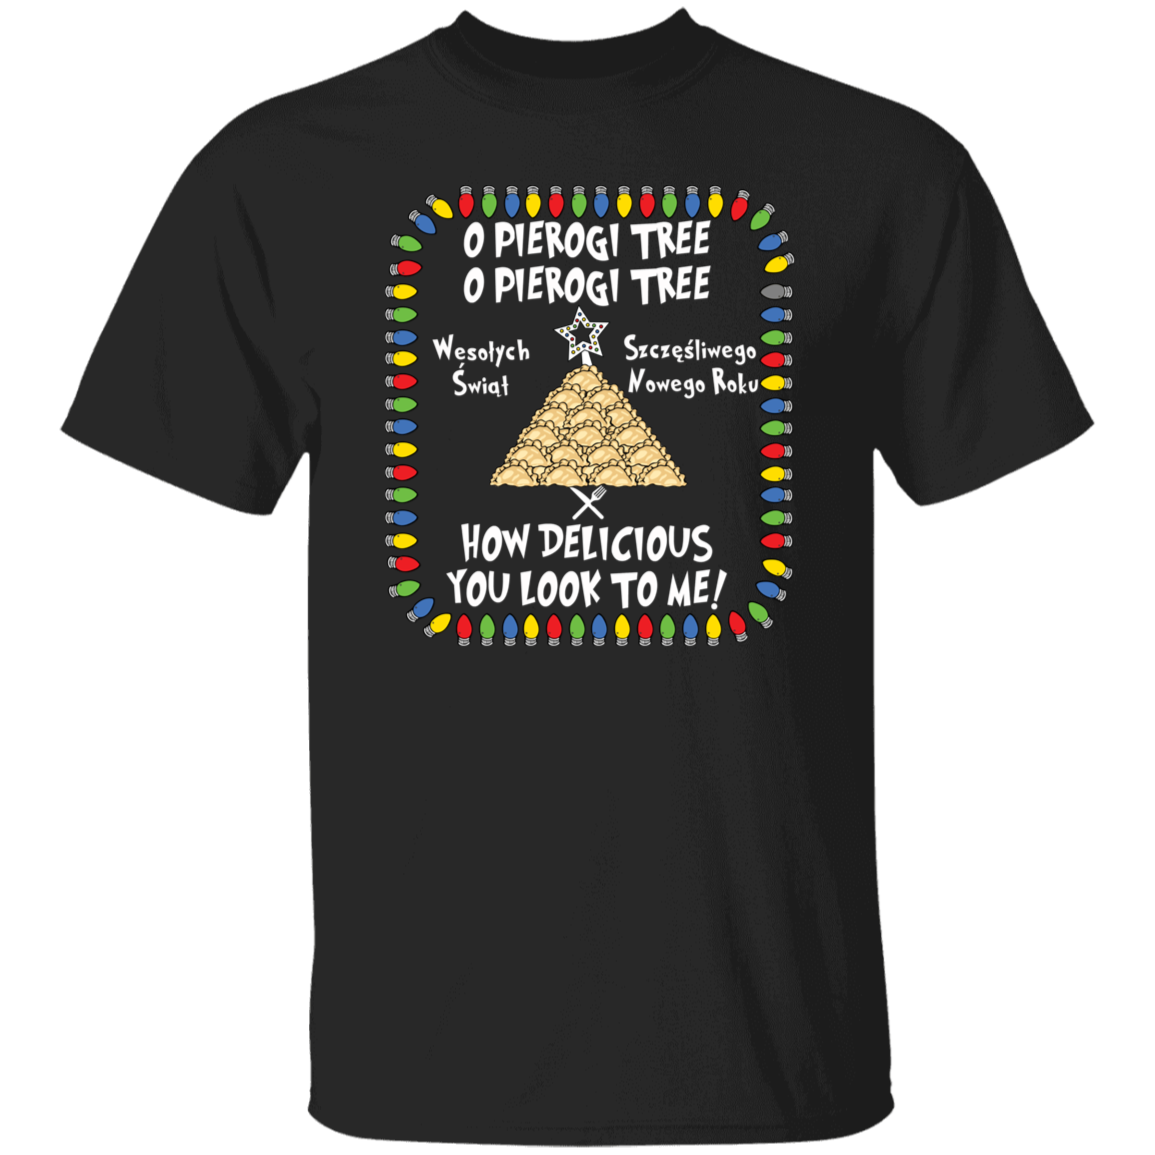 Pierogi Tree Shirt - How Delicious You Look To Me T-Shirts CustomCat Black S 